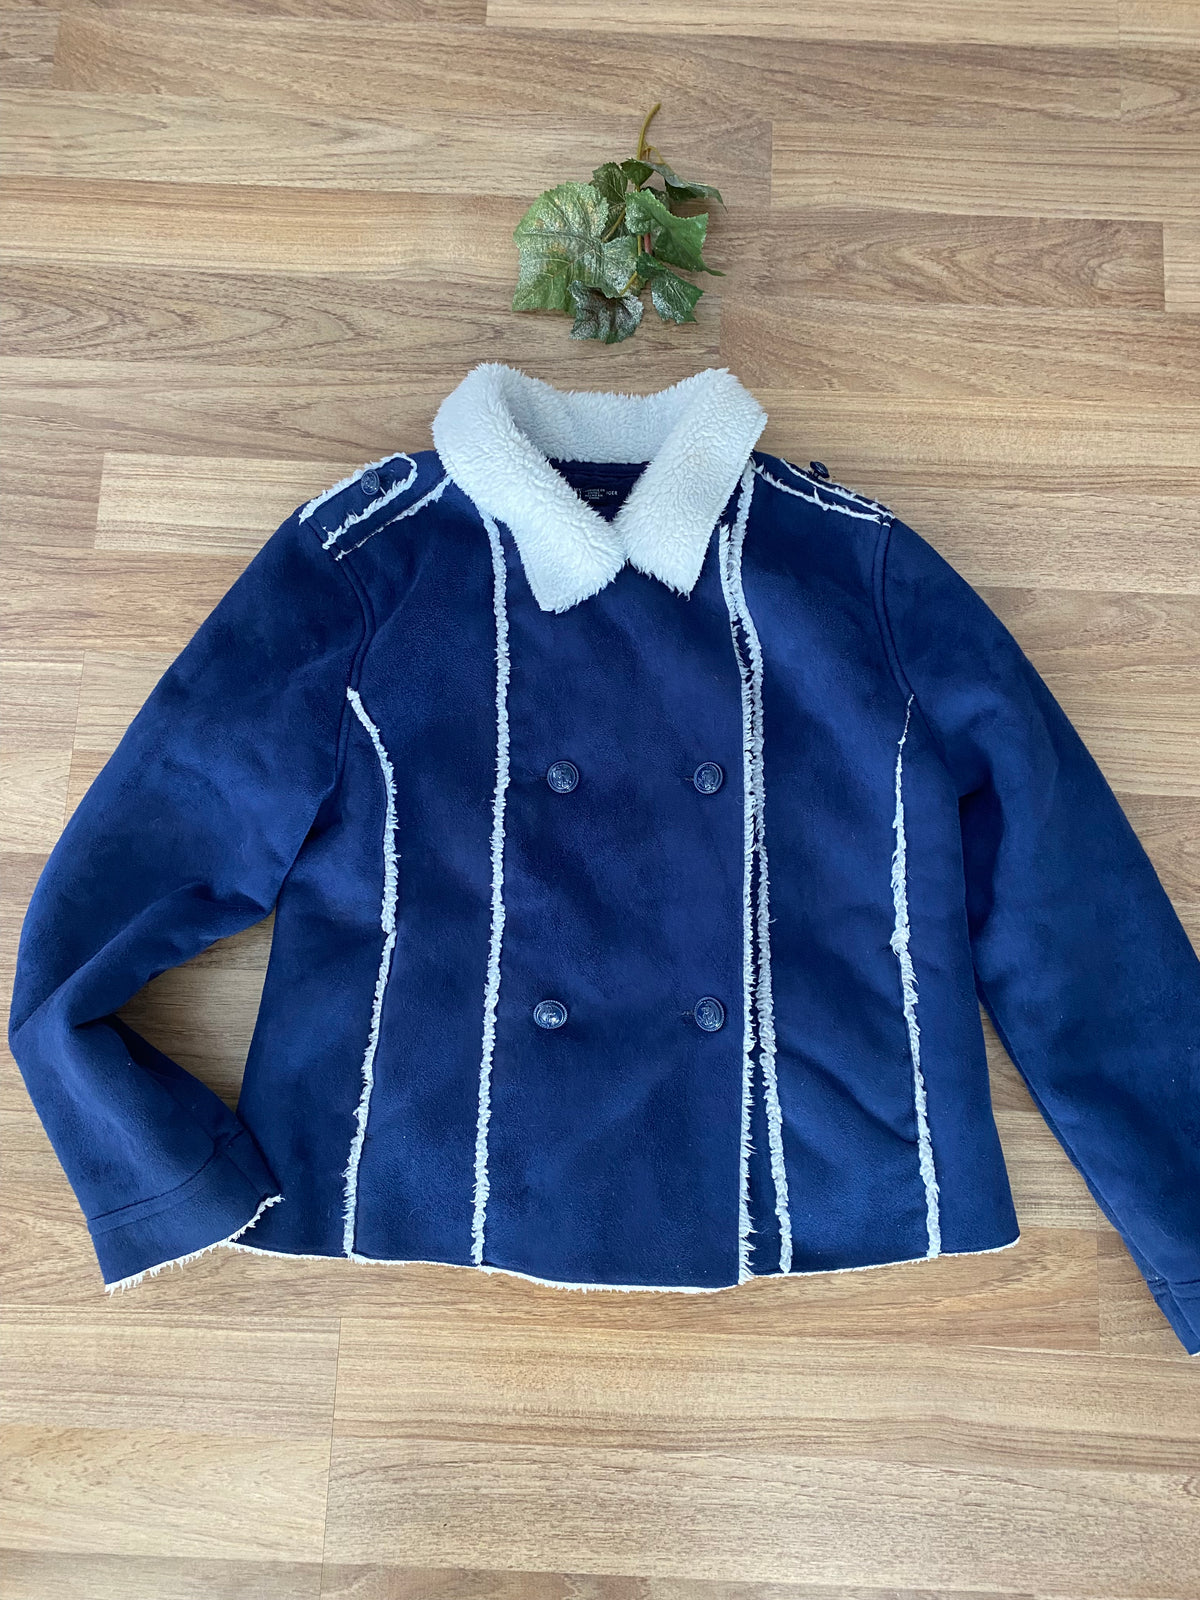 Button Up Jacket (Girls Size 12-14)